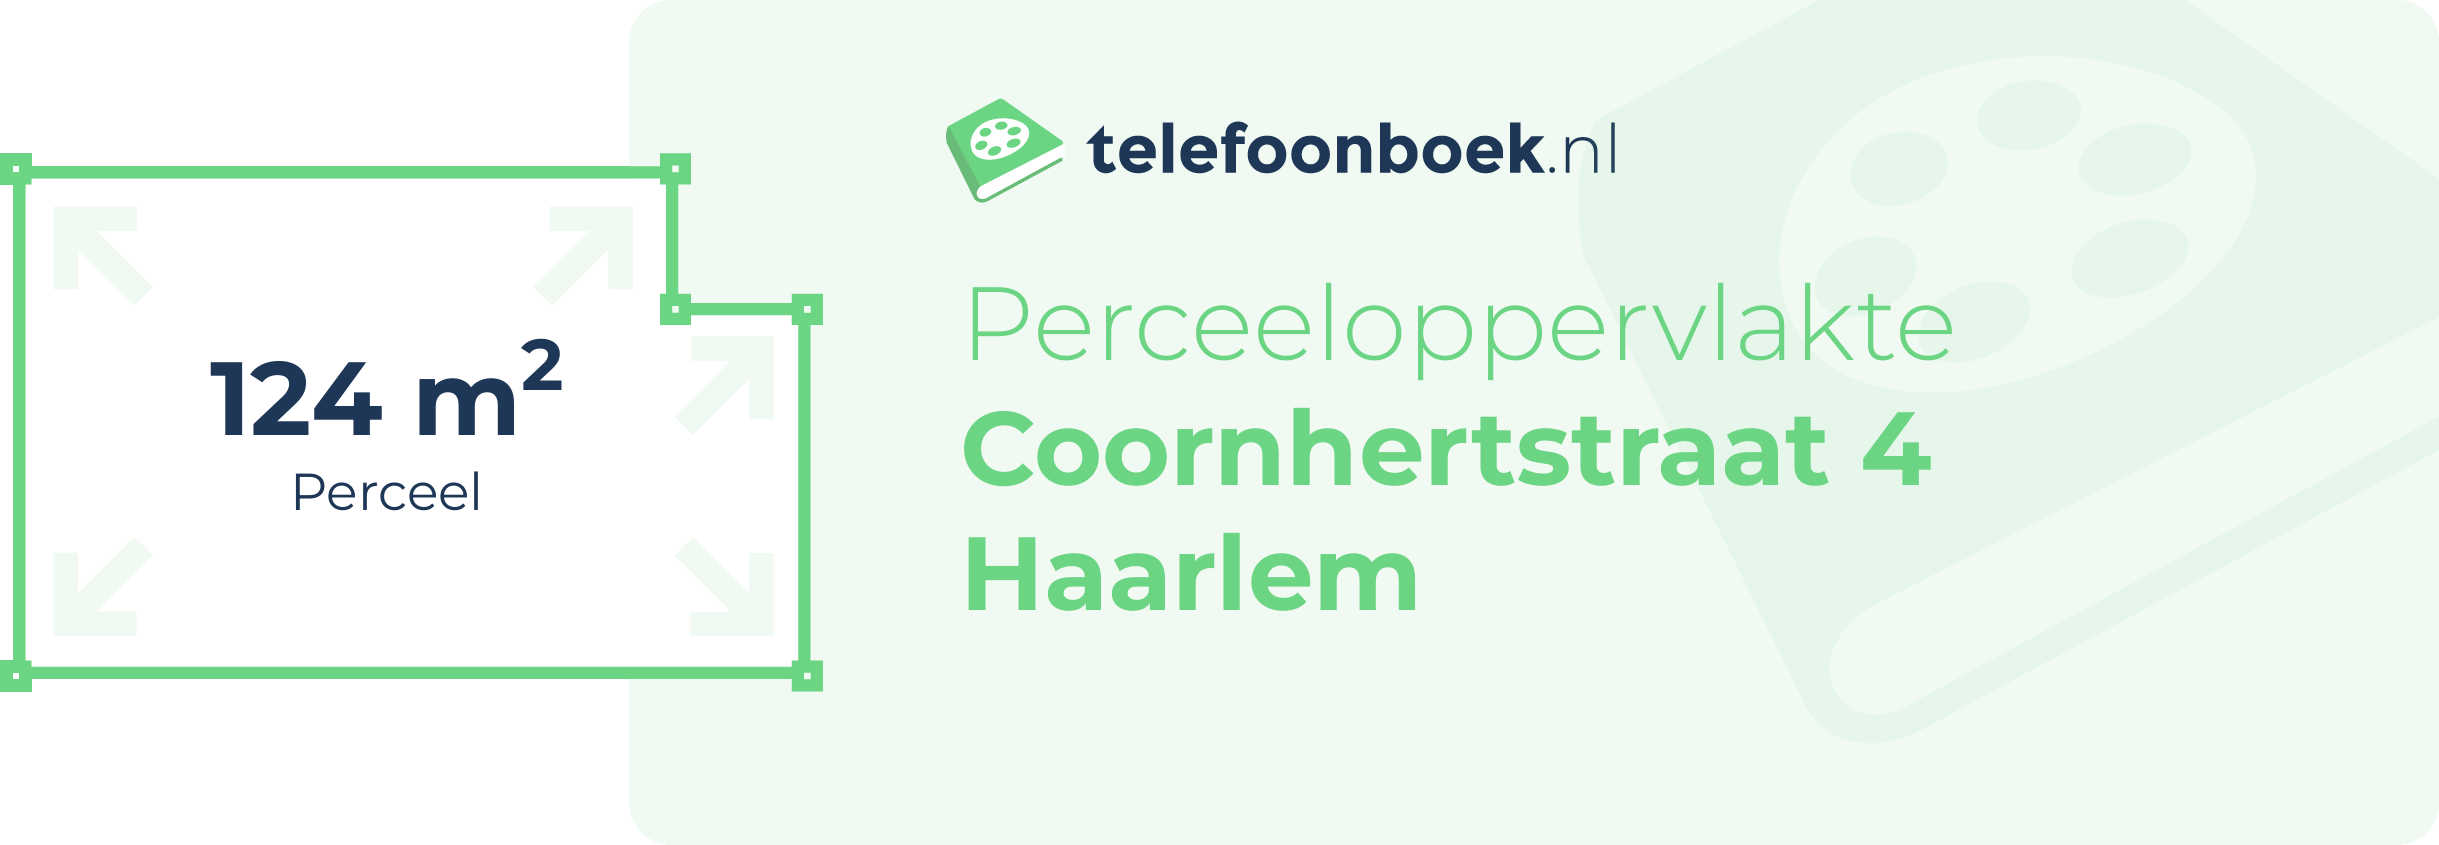 Perceeloppervlakte Coornhertstraat 4 Haarlem